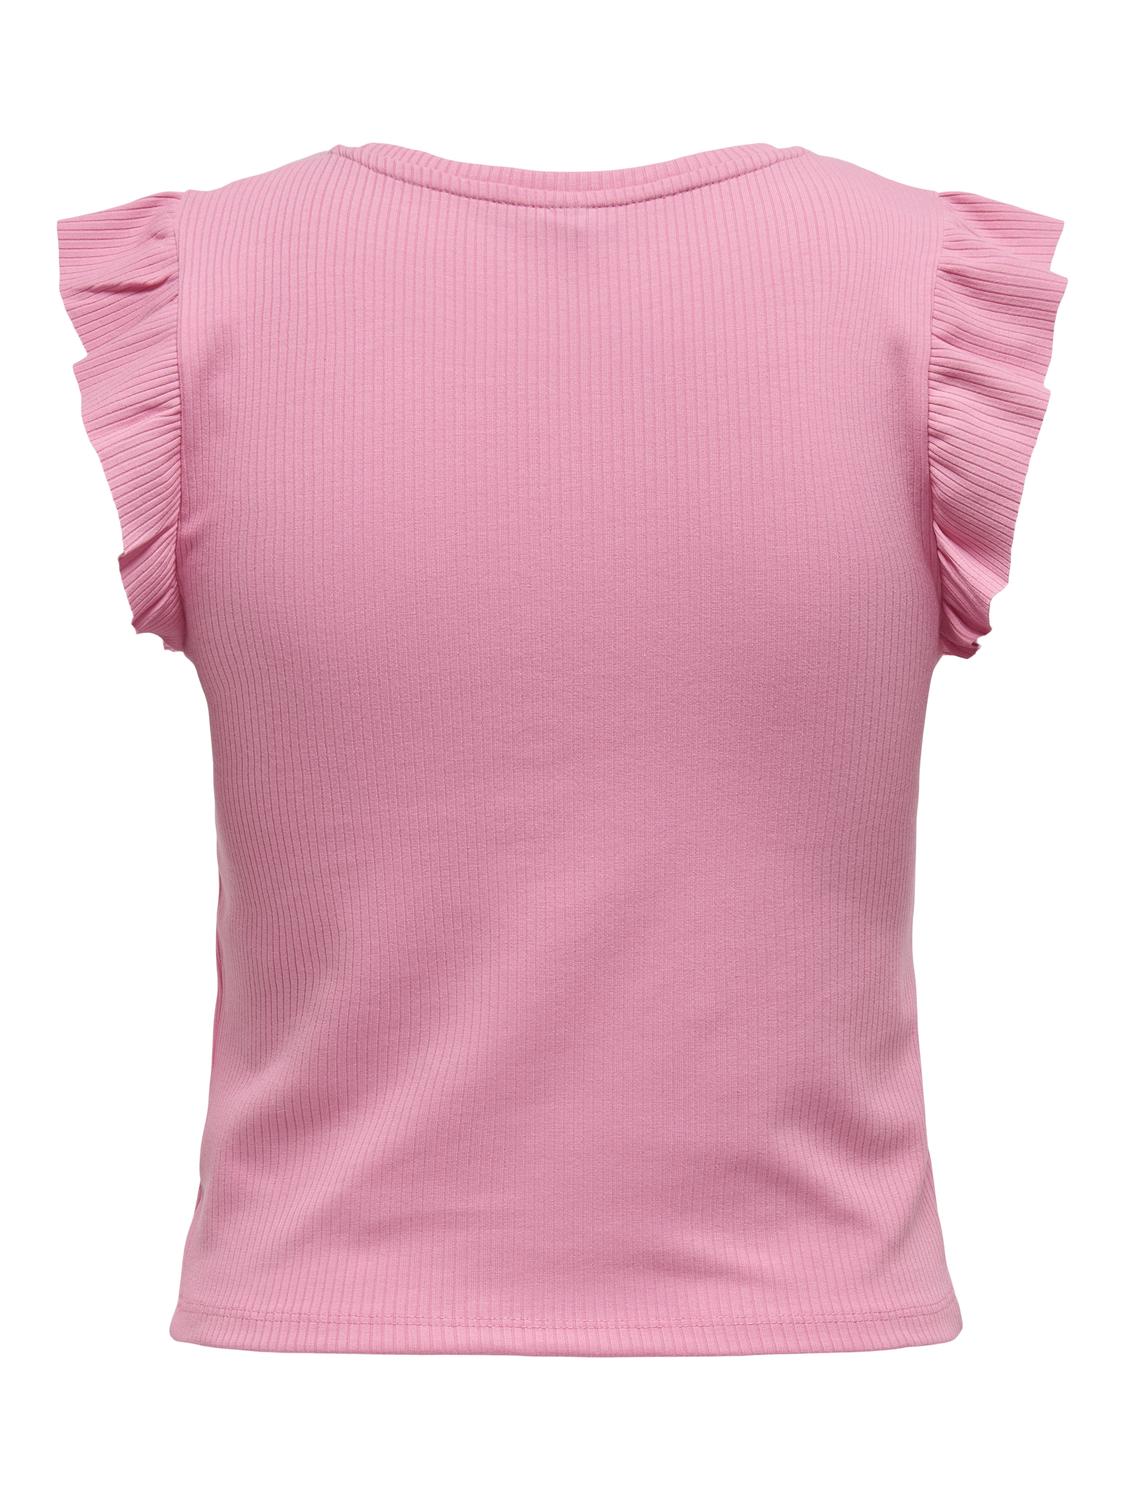 PGVIOLET T-Shirts & Tops - Sachet Pink